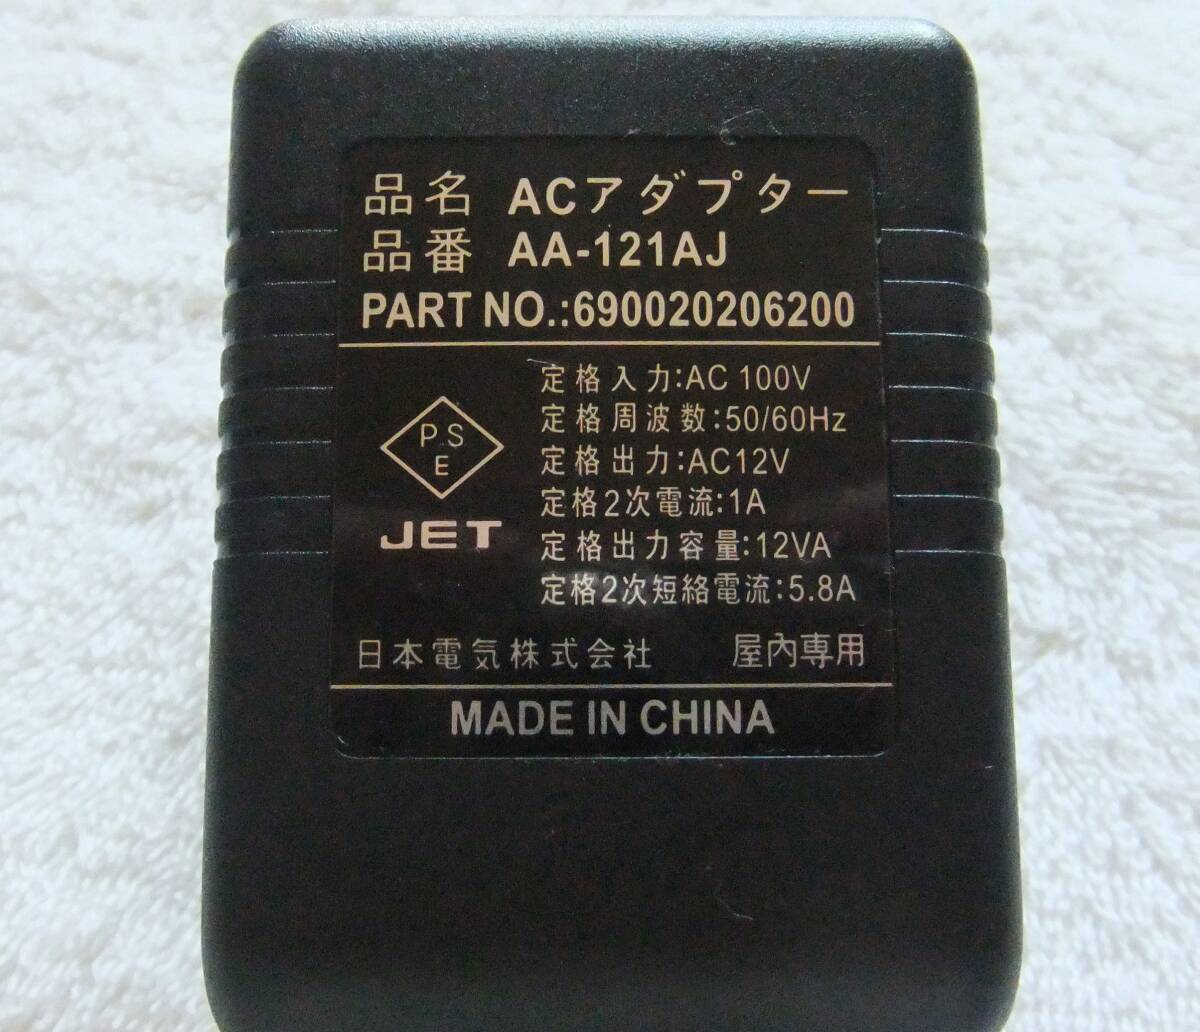  Japan electric original AC adaptor AA-121AJ AC 12V 1A used 